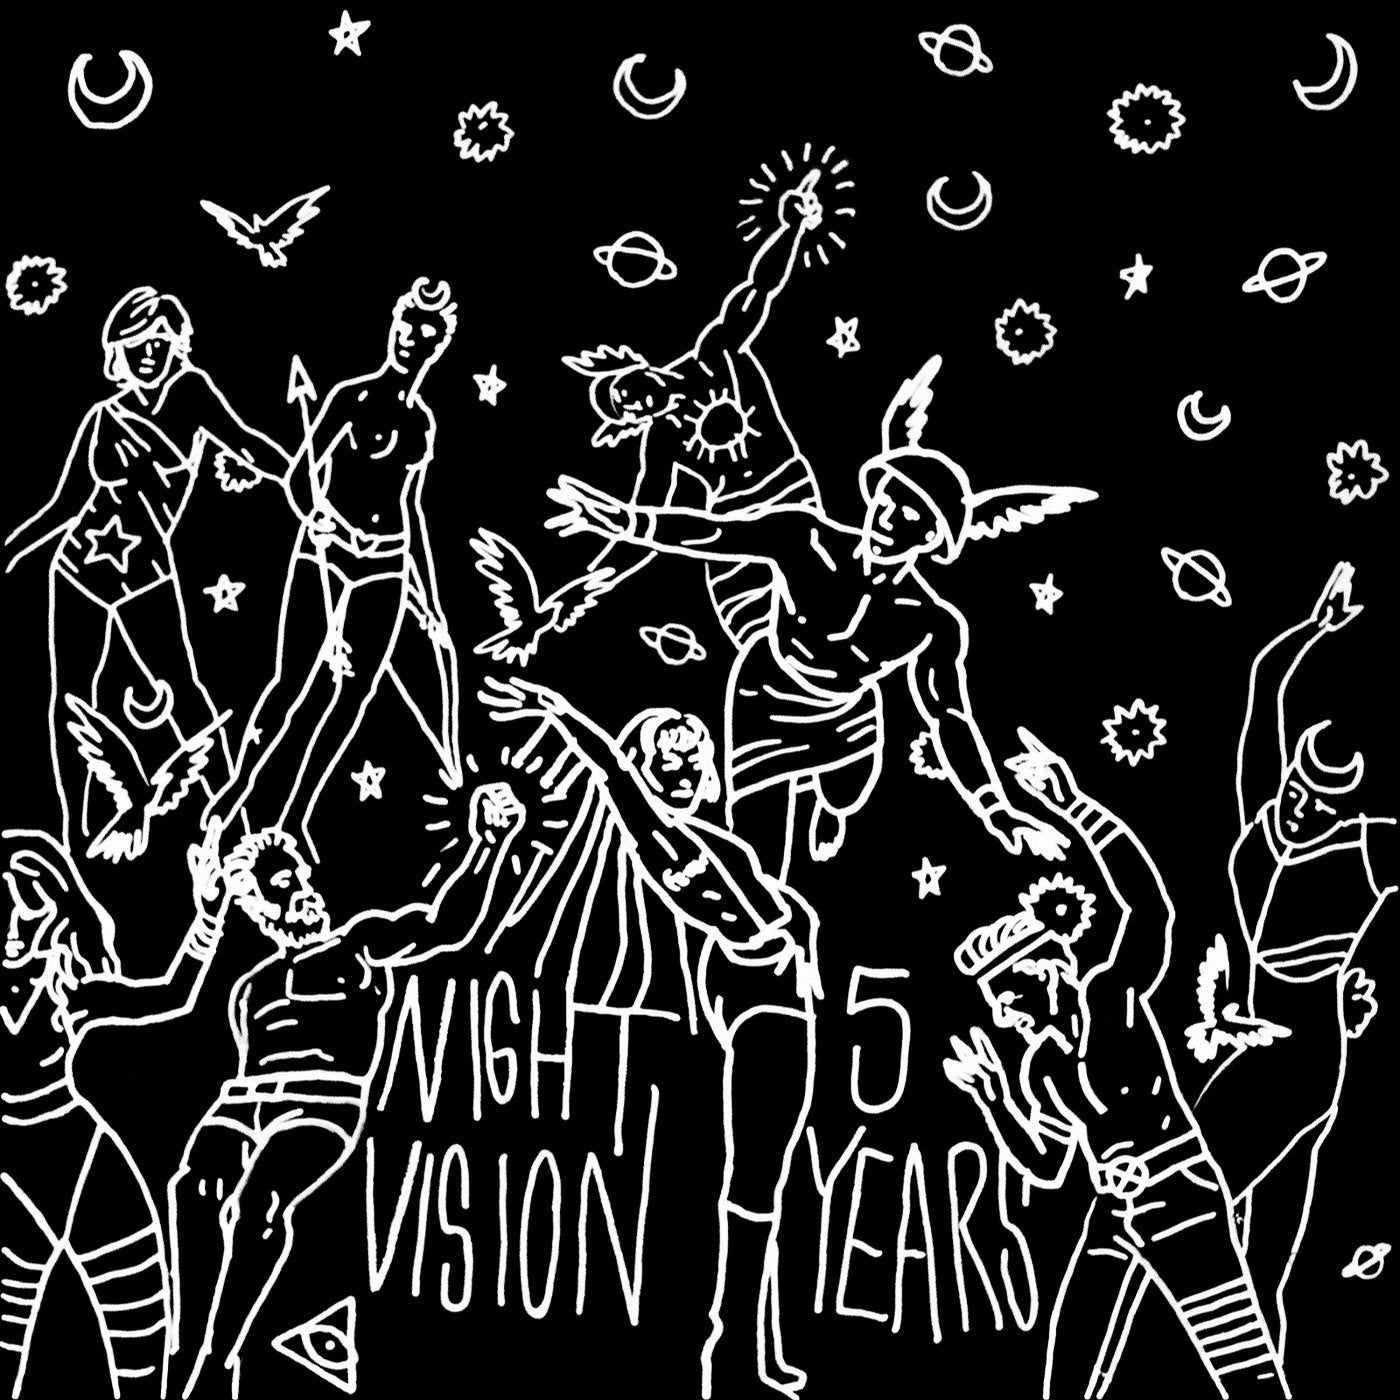 Night Vision - 5 Years